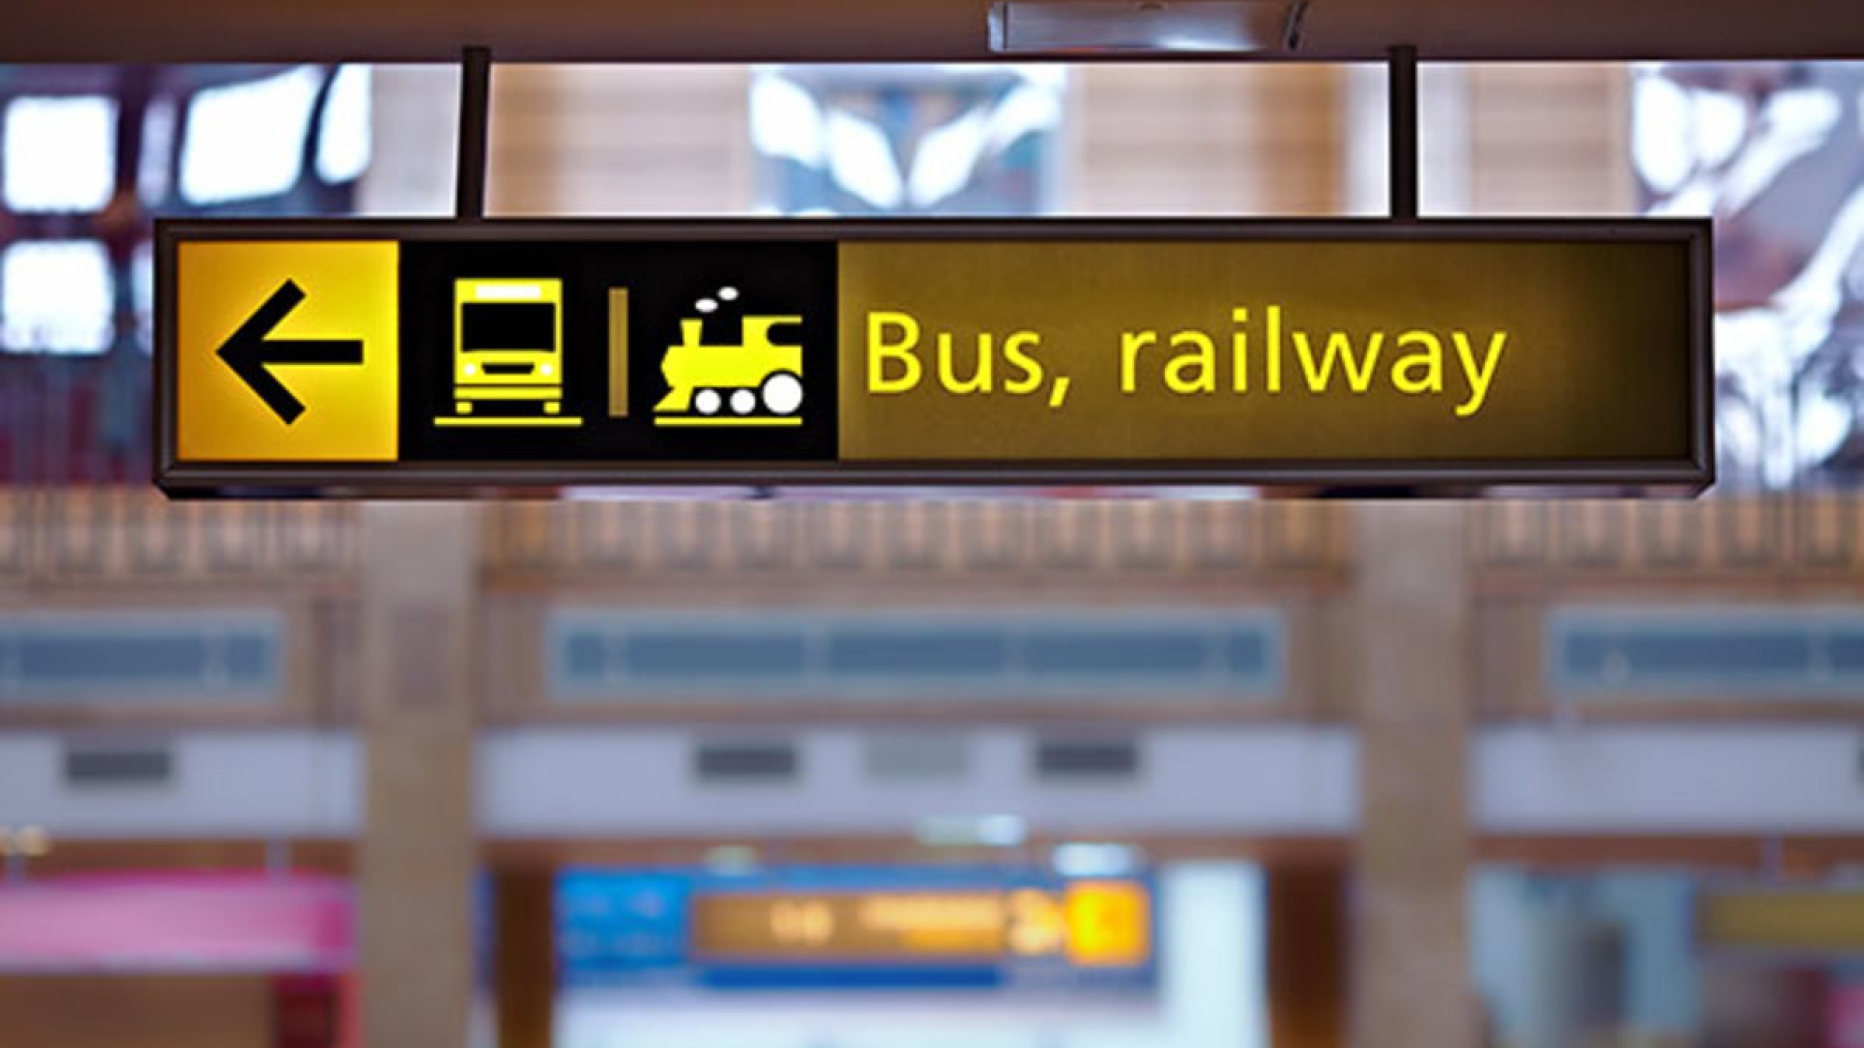 Sign sayin 'Bus, railway'